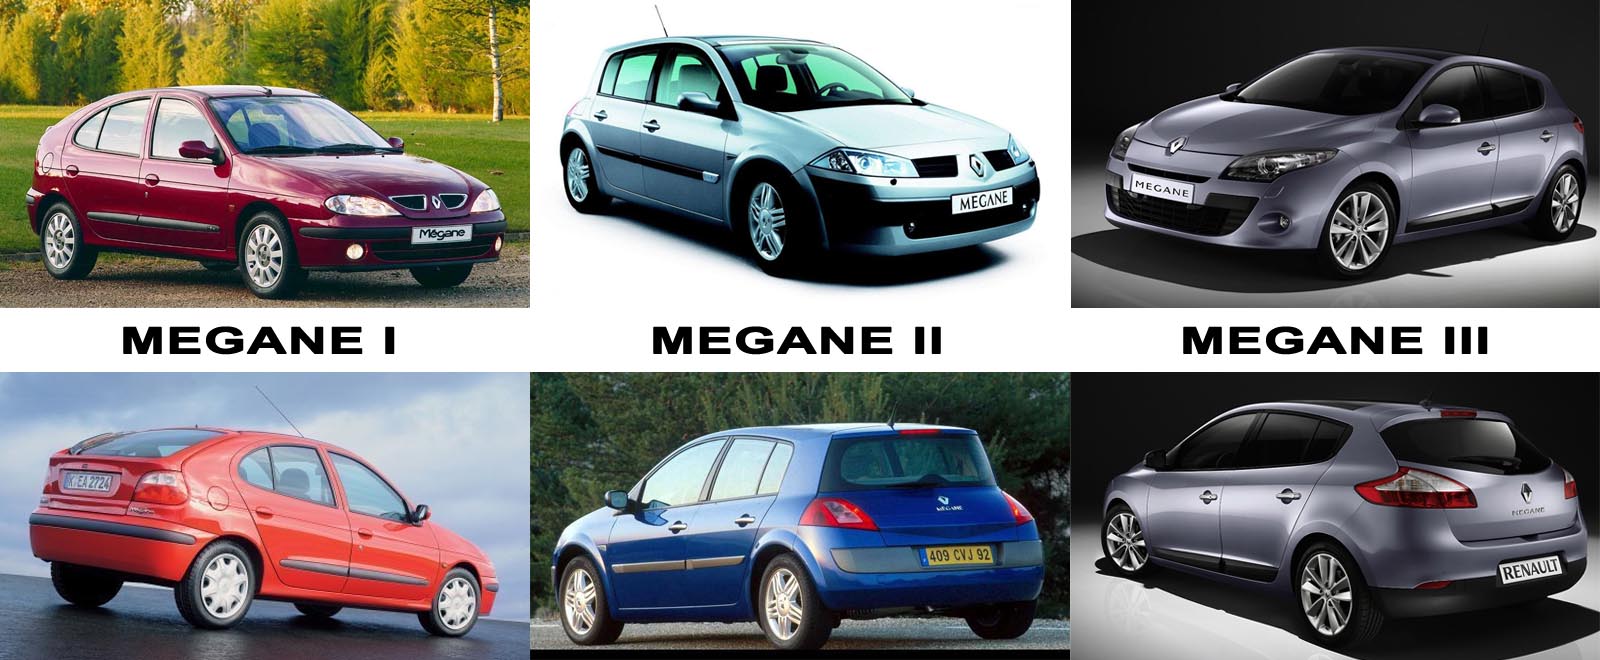 Cele trei generatii Renault Megane, foarte diferite ca design